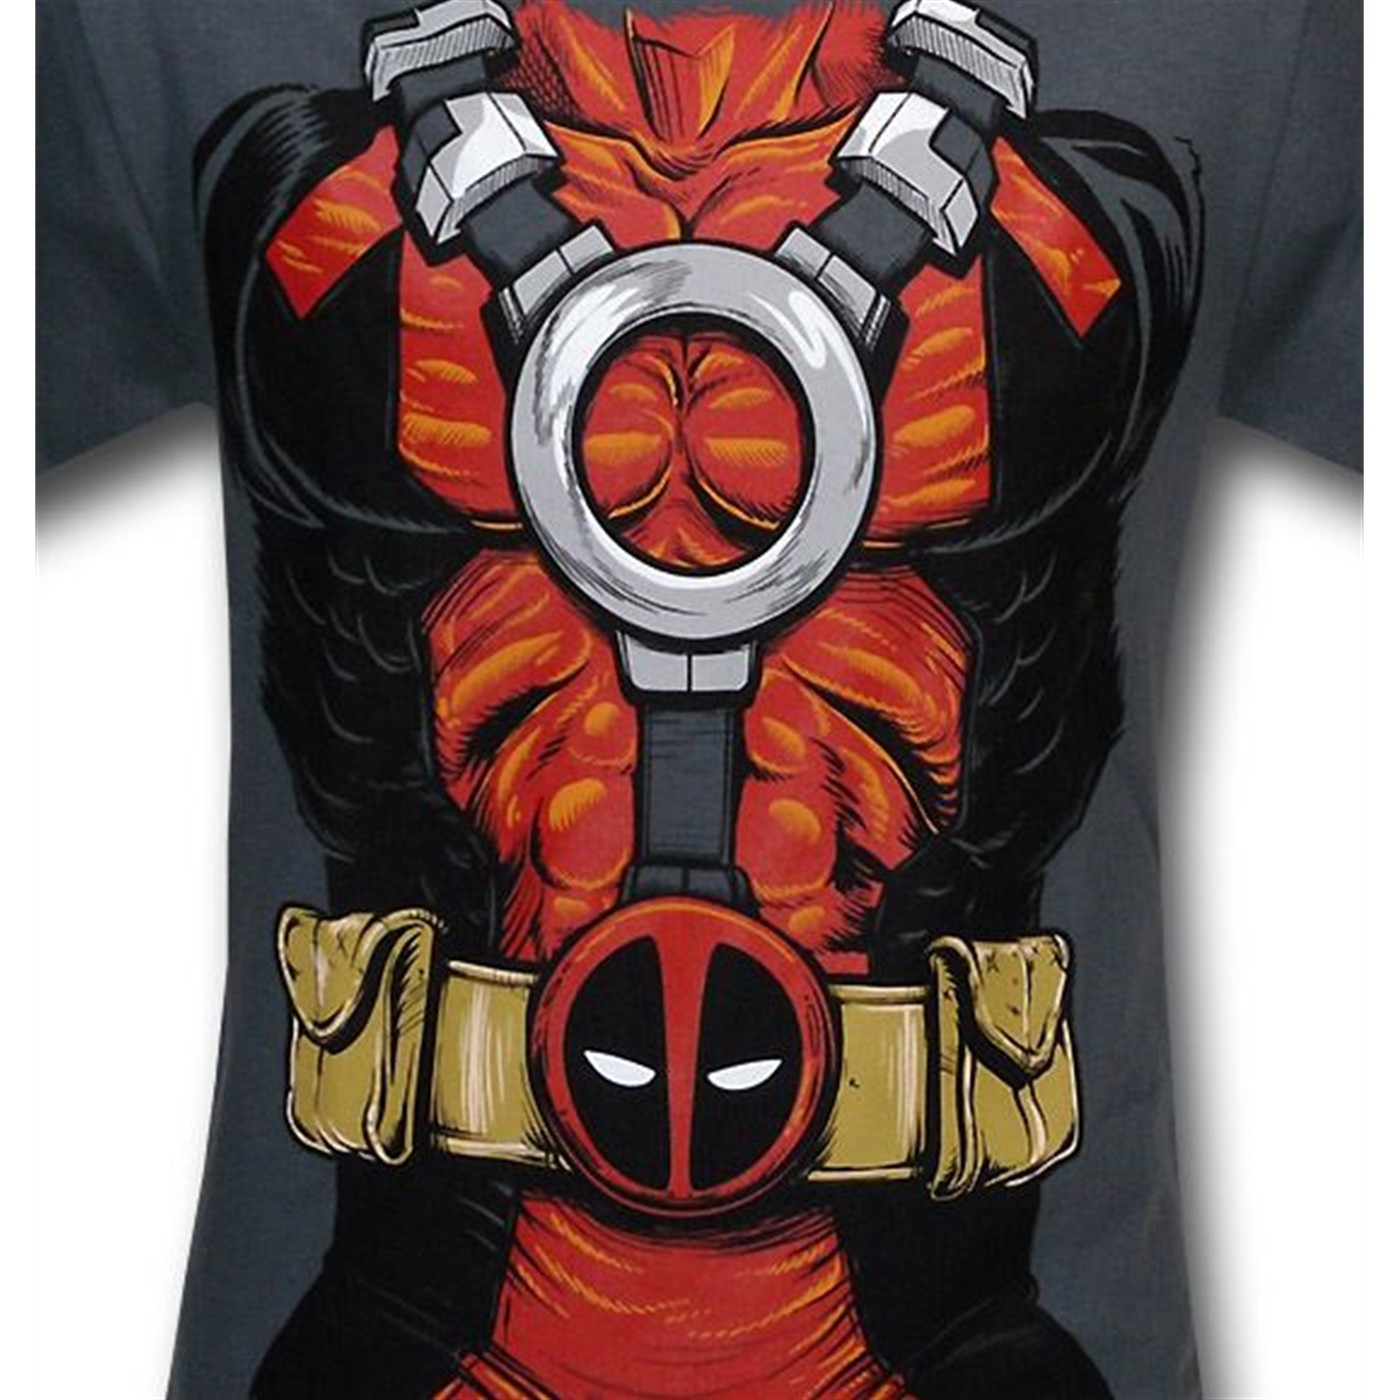 Deadpool Costume T-Shirt